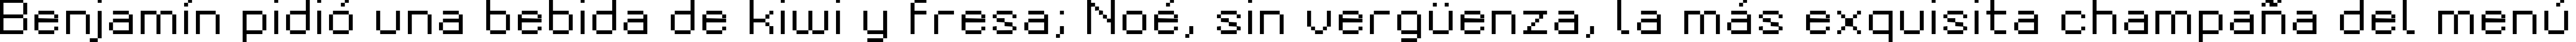 Пример написания шрифтом Grixel Kyrou 9 Regular Xtnd текста на испанском